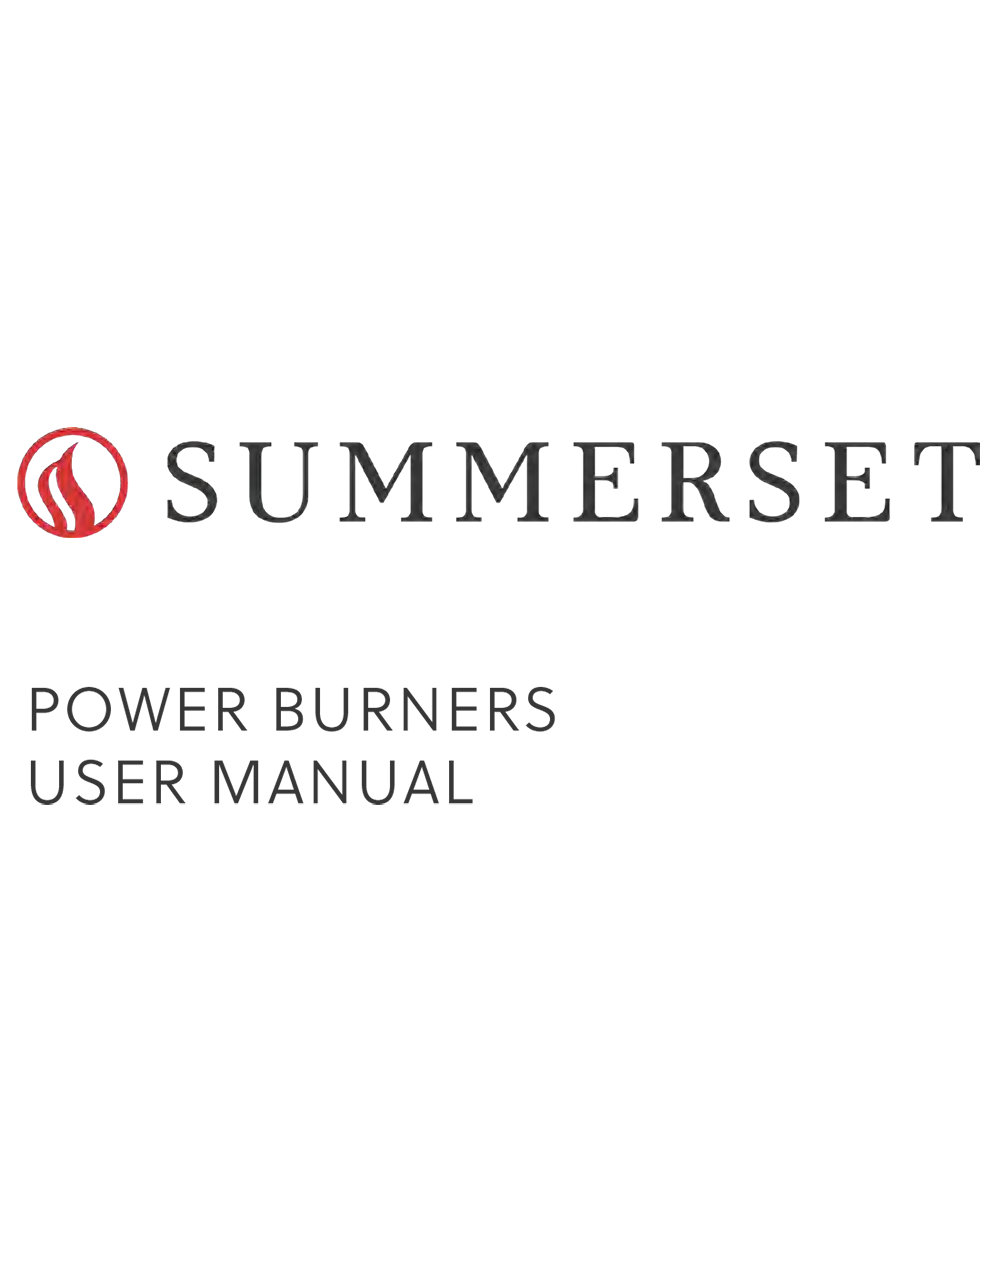 Power Burners Manual Cover